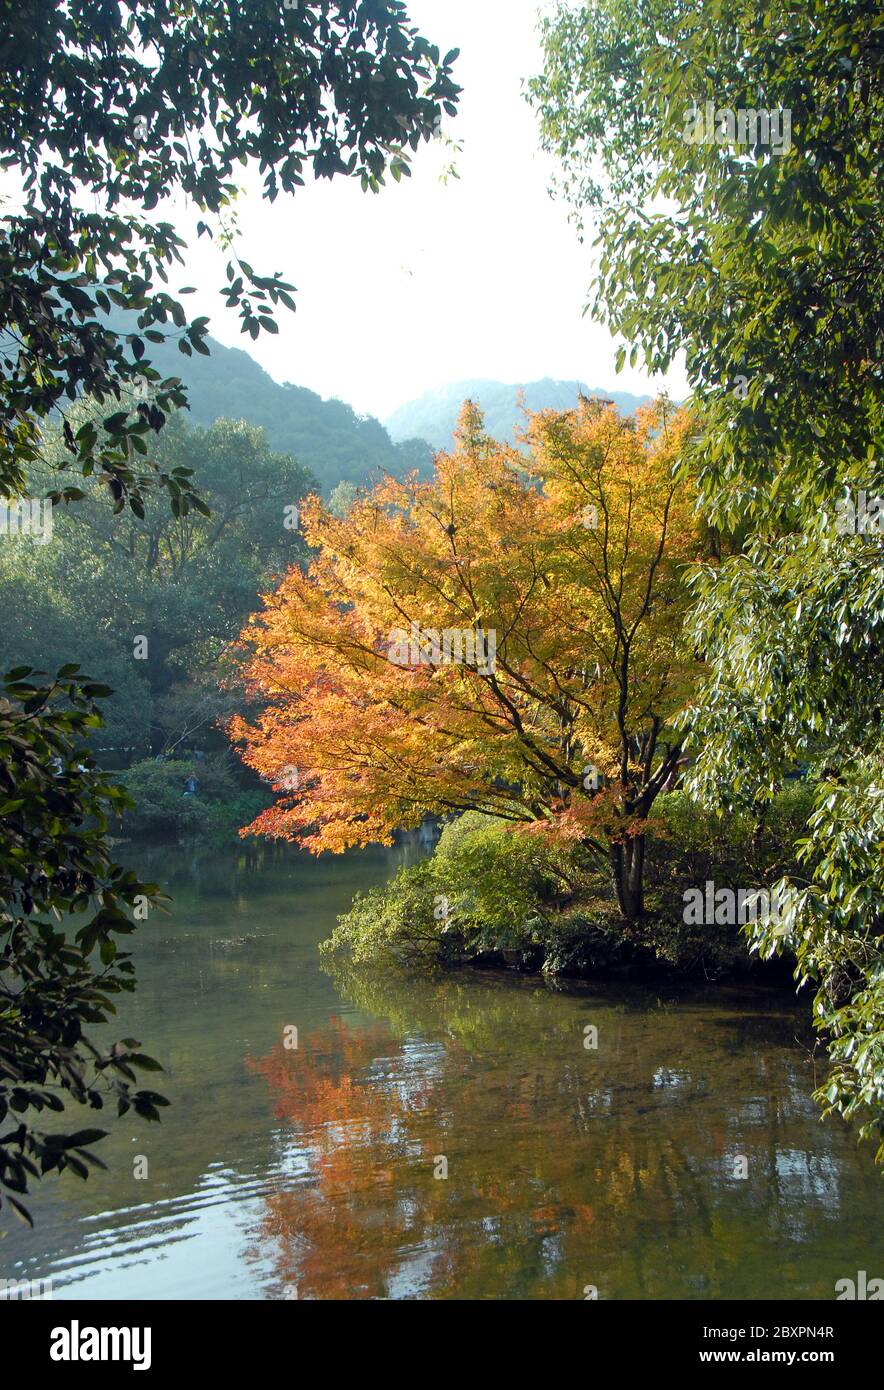 Longjing Tea Village near Hangzhou in Zhejiang Province, China. A pretty lake and trees in fall colors in the forest near Longjing. Stock Photo